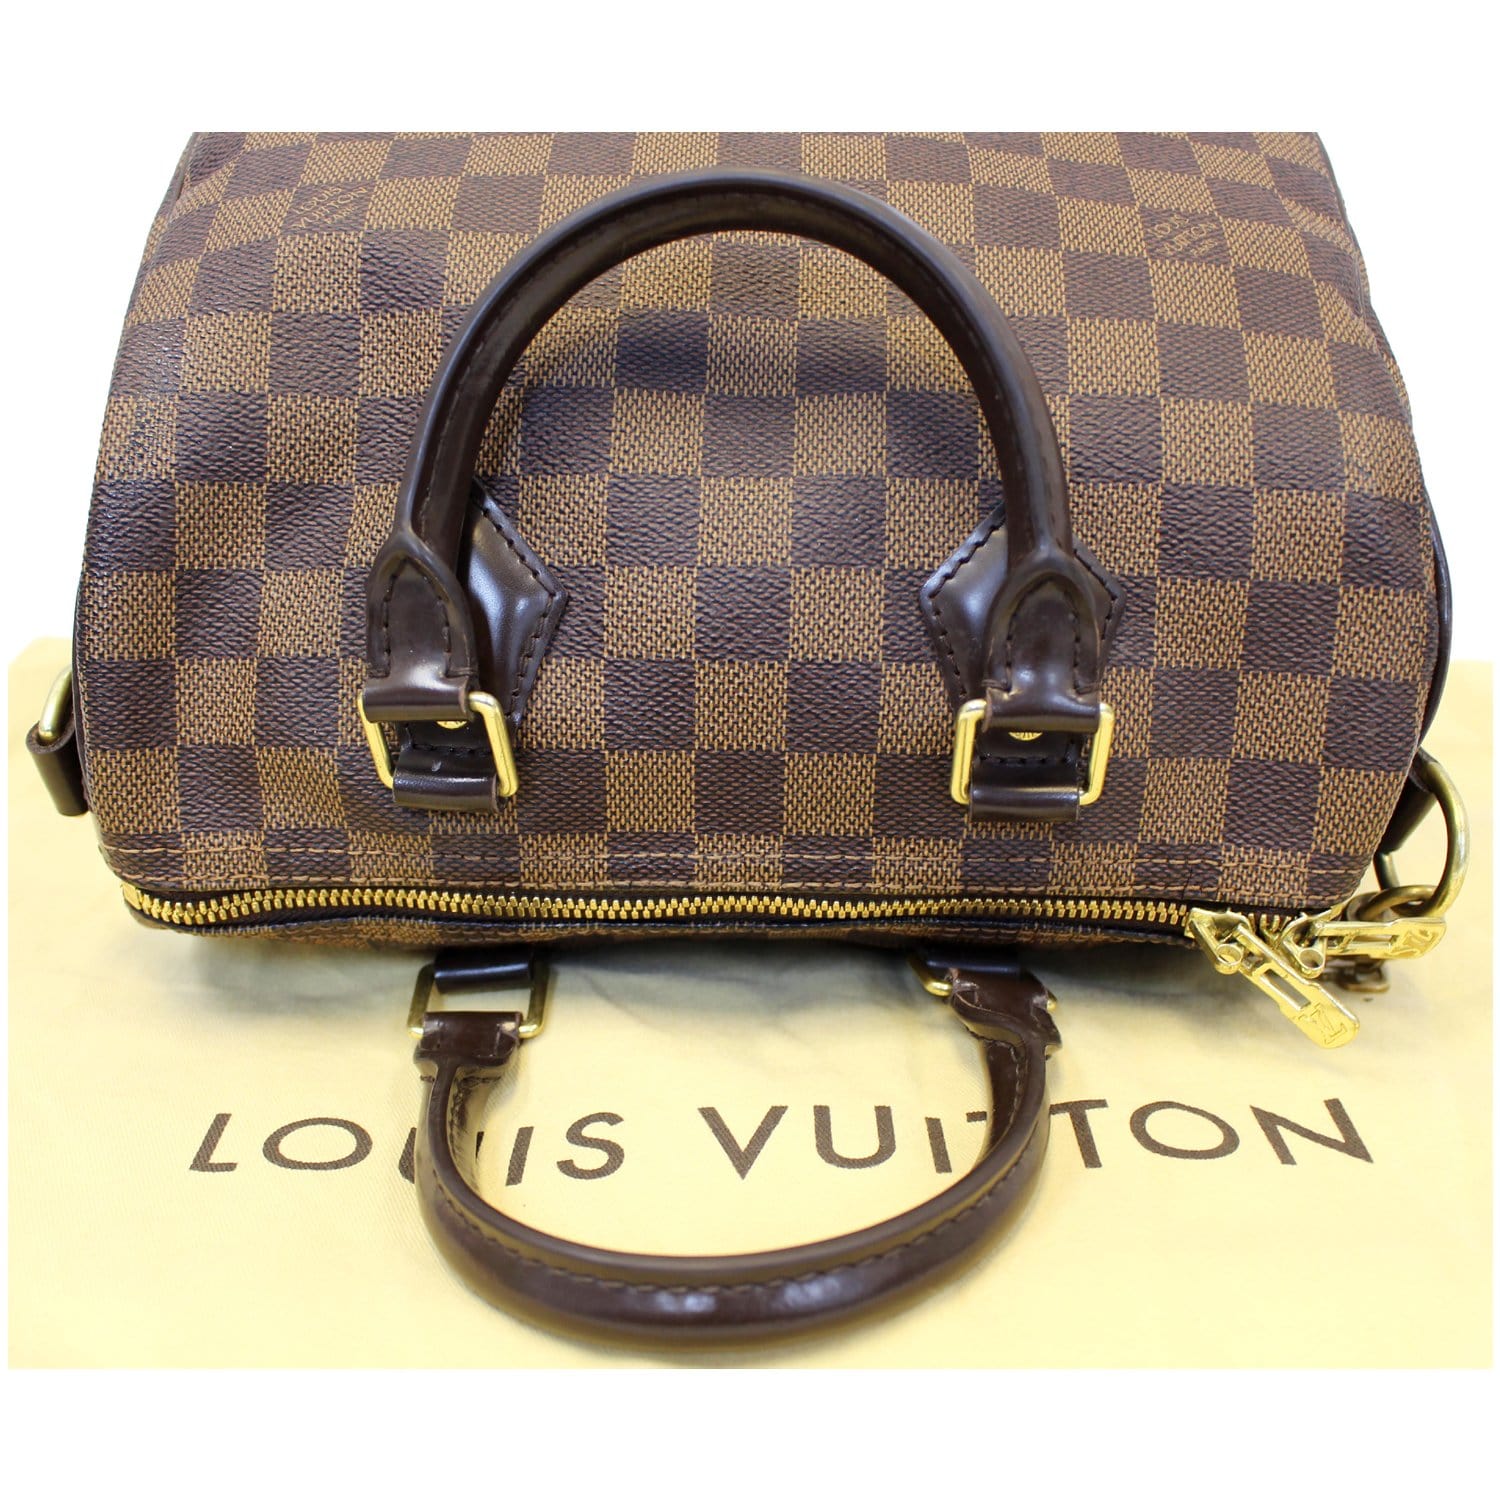 Louis Vuitton Speedy 25 Bag with Shoulder Strap